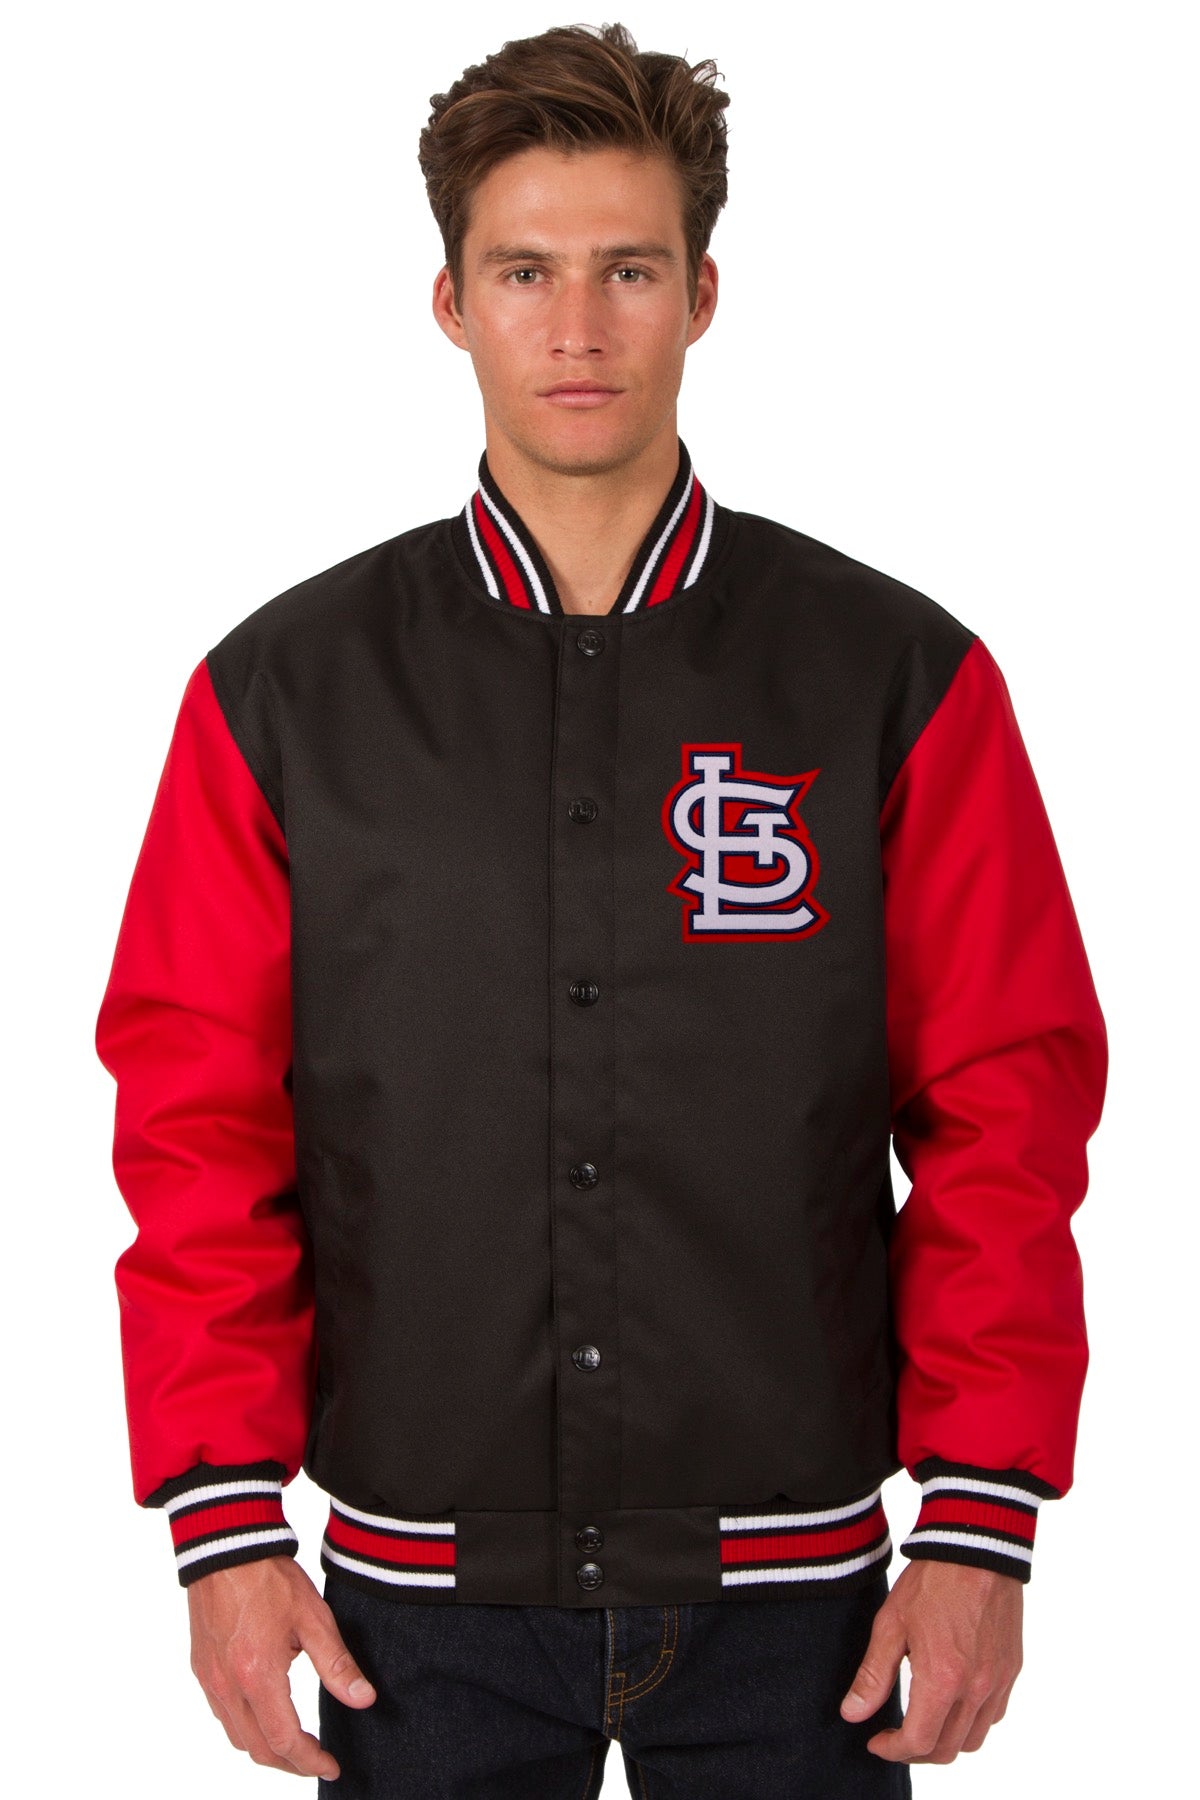 MLB Black Florida Marlins Varsity Jacket - Maker of Jacket